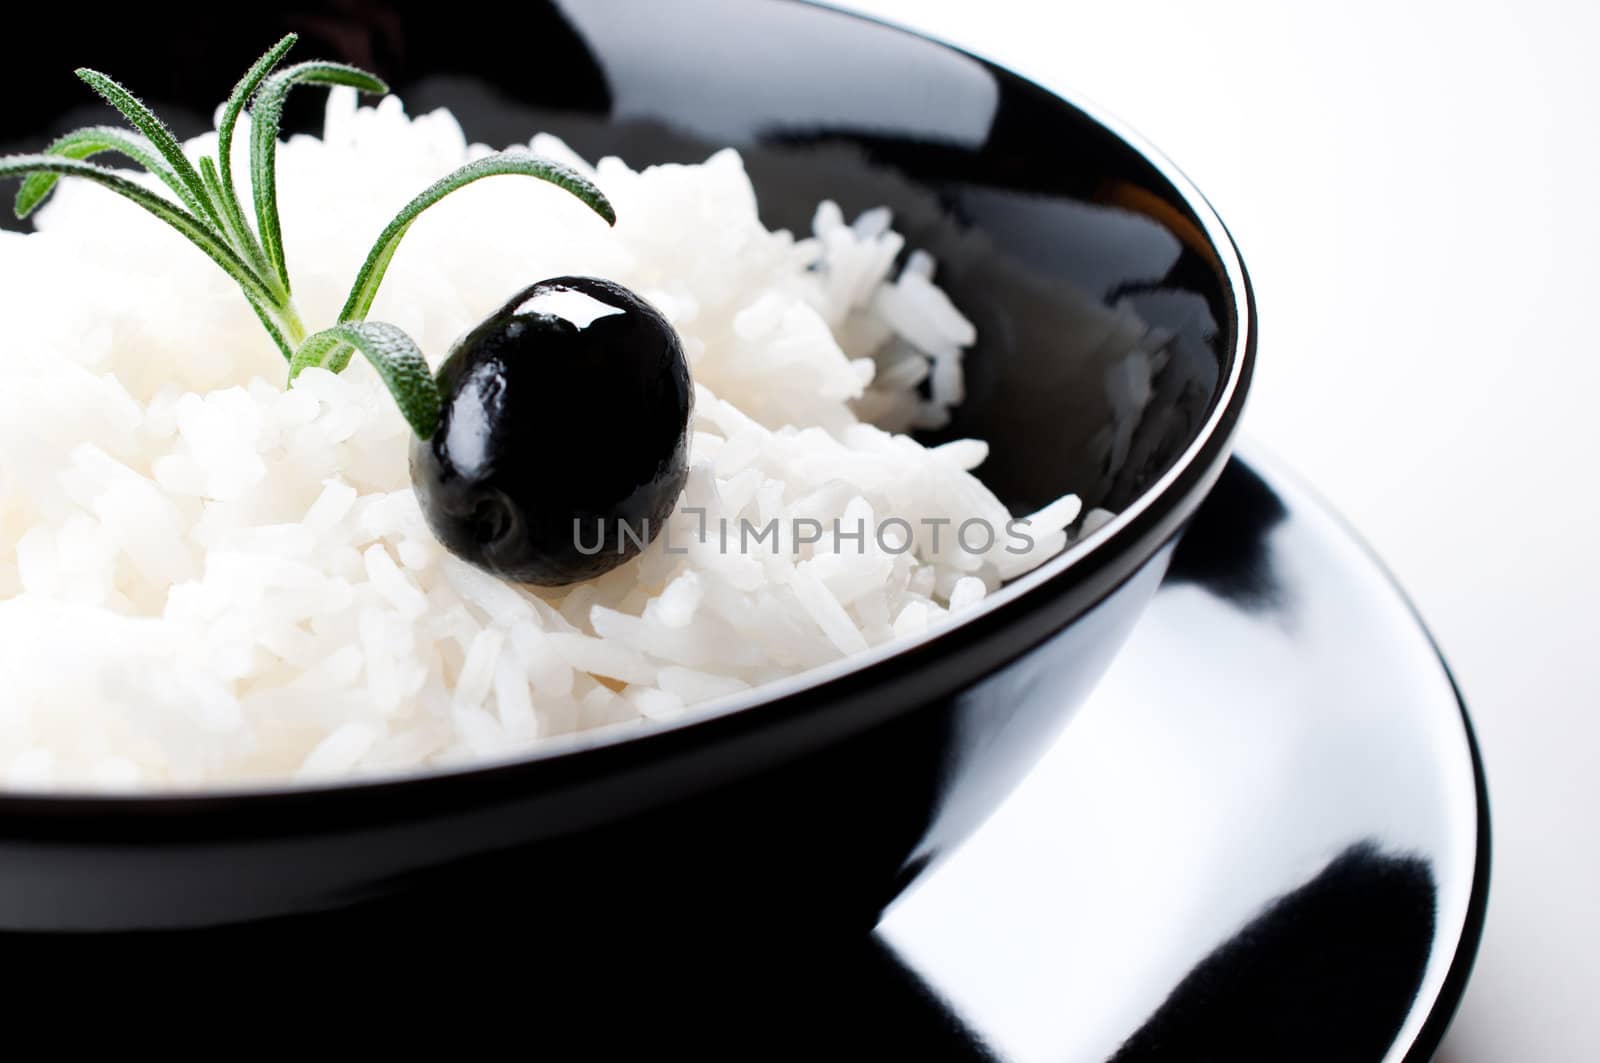 White rice in black bowl by Nanisimova